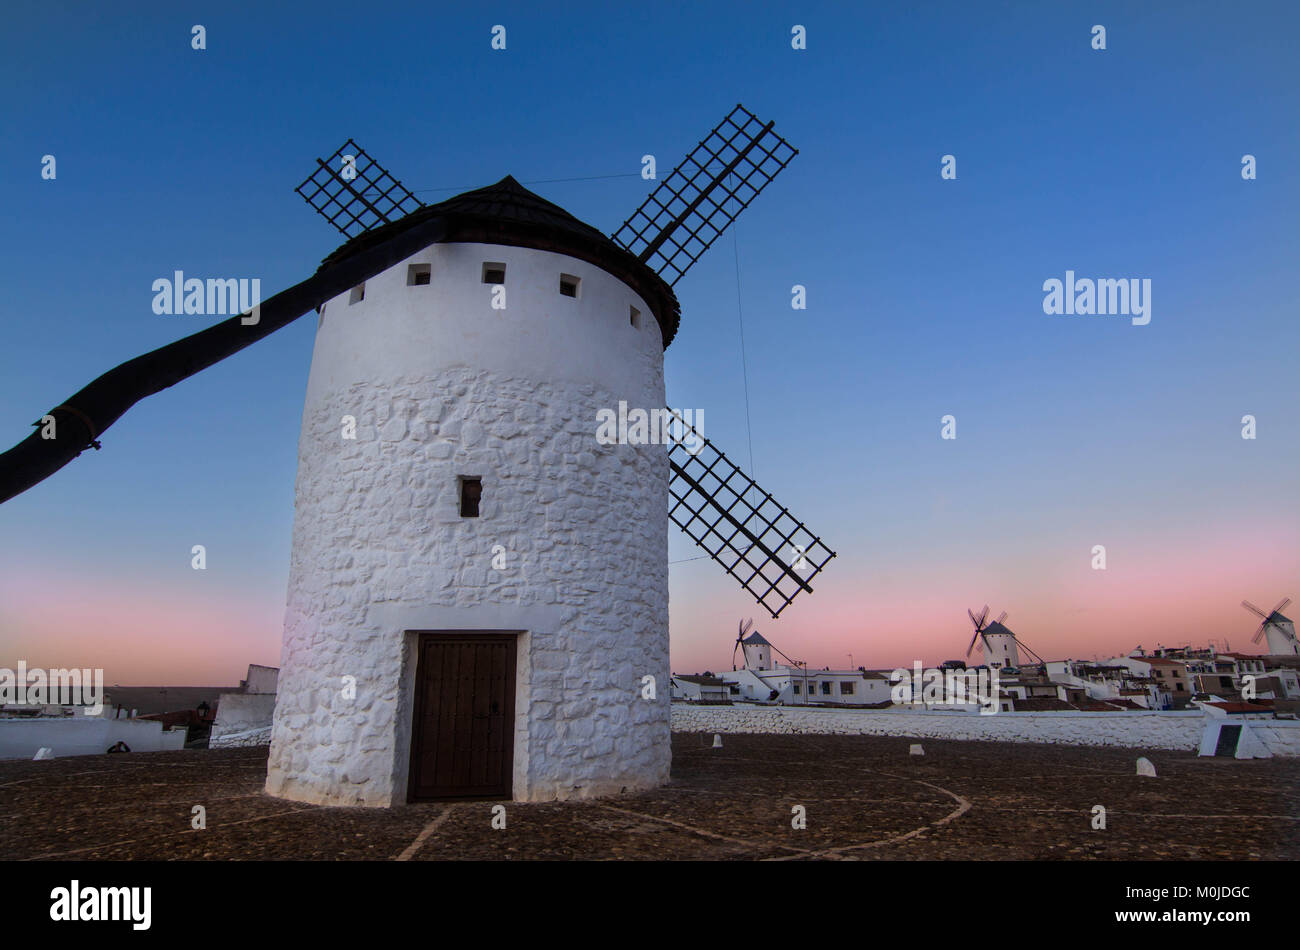 Windmills route, Campo de Criptana, Toledo province, Spain, La mancha, Don quixote route, panoramic view at sunset Stock Photo